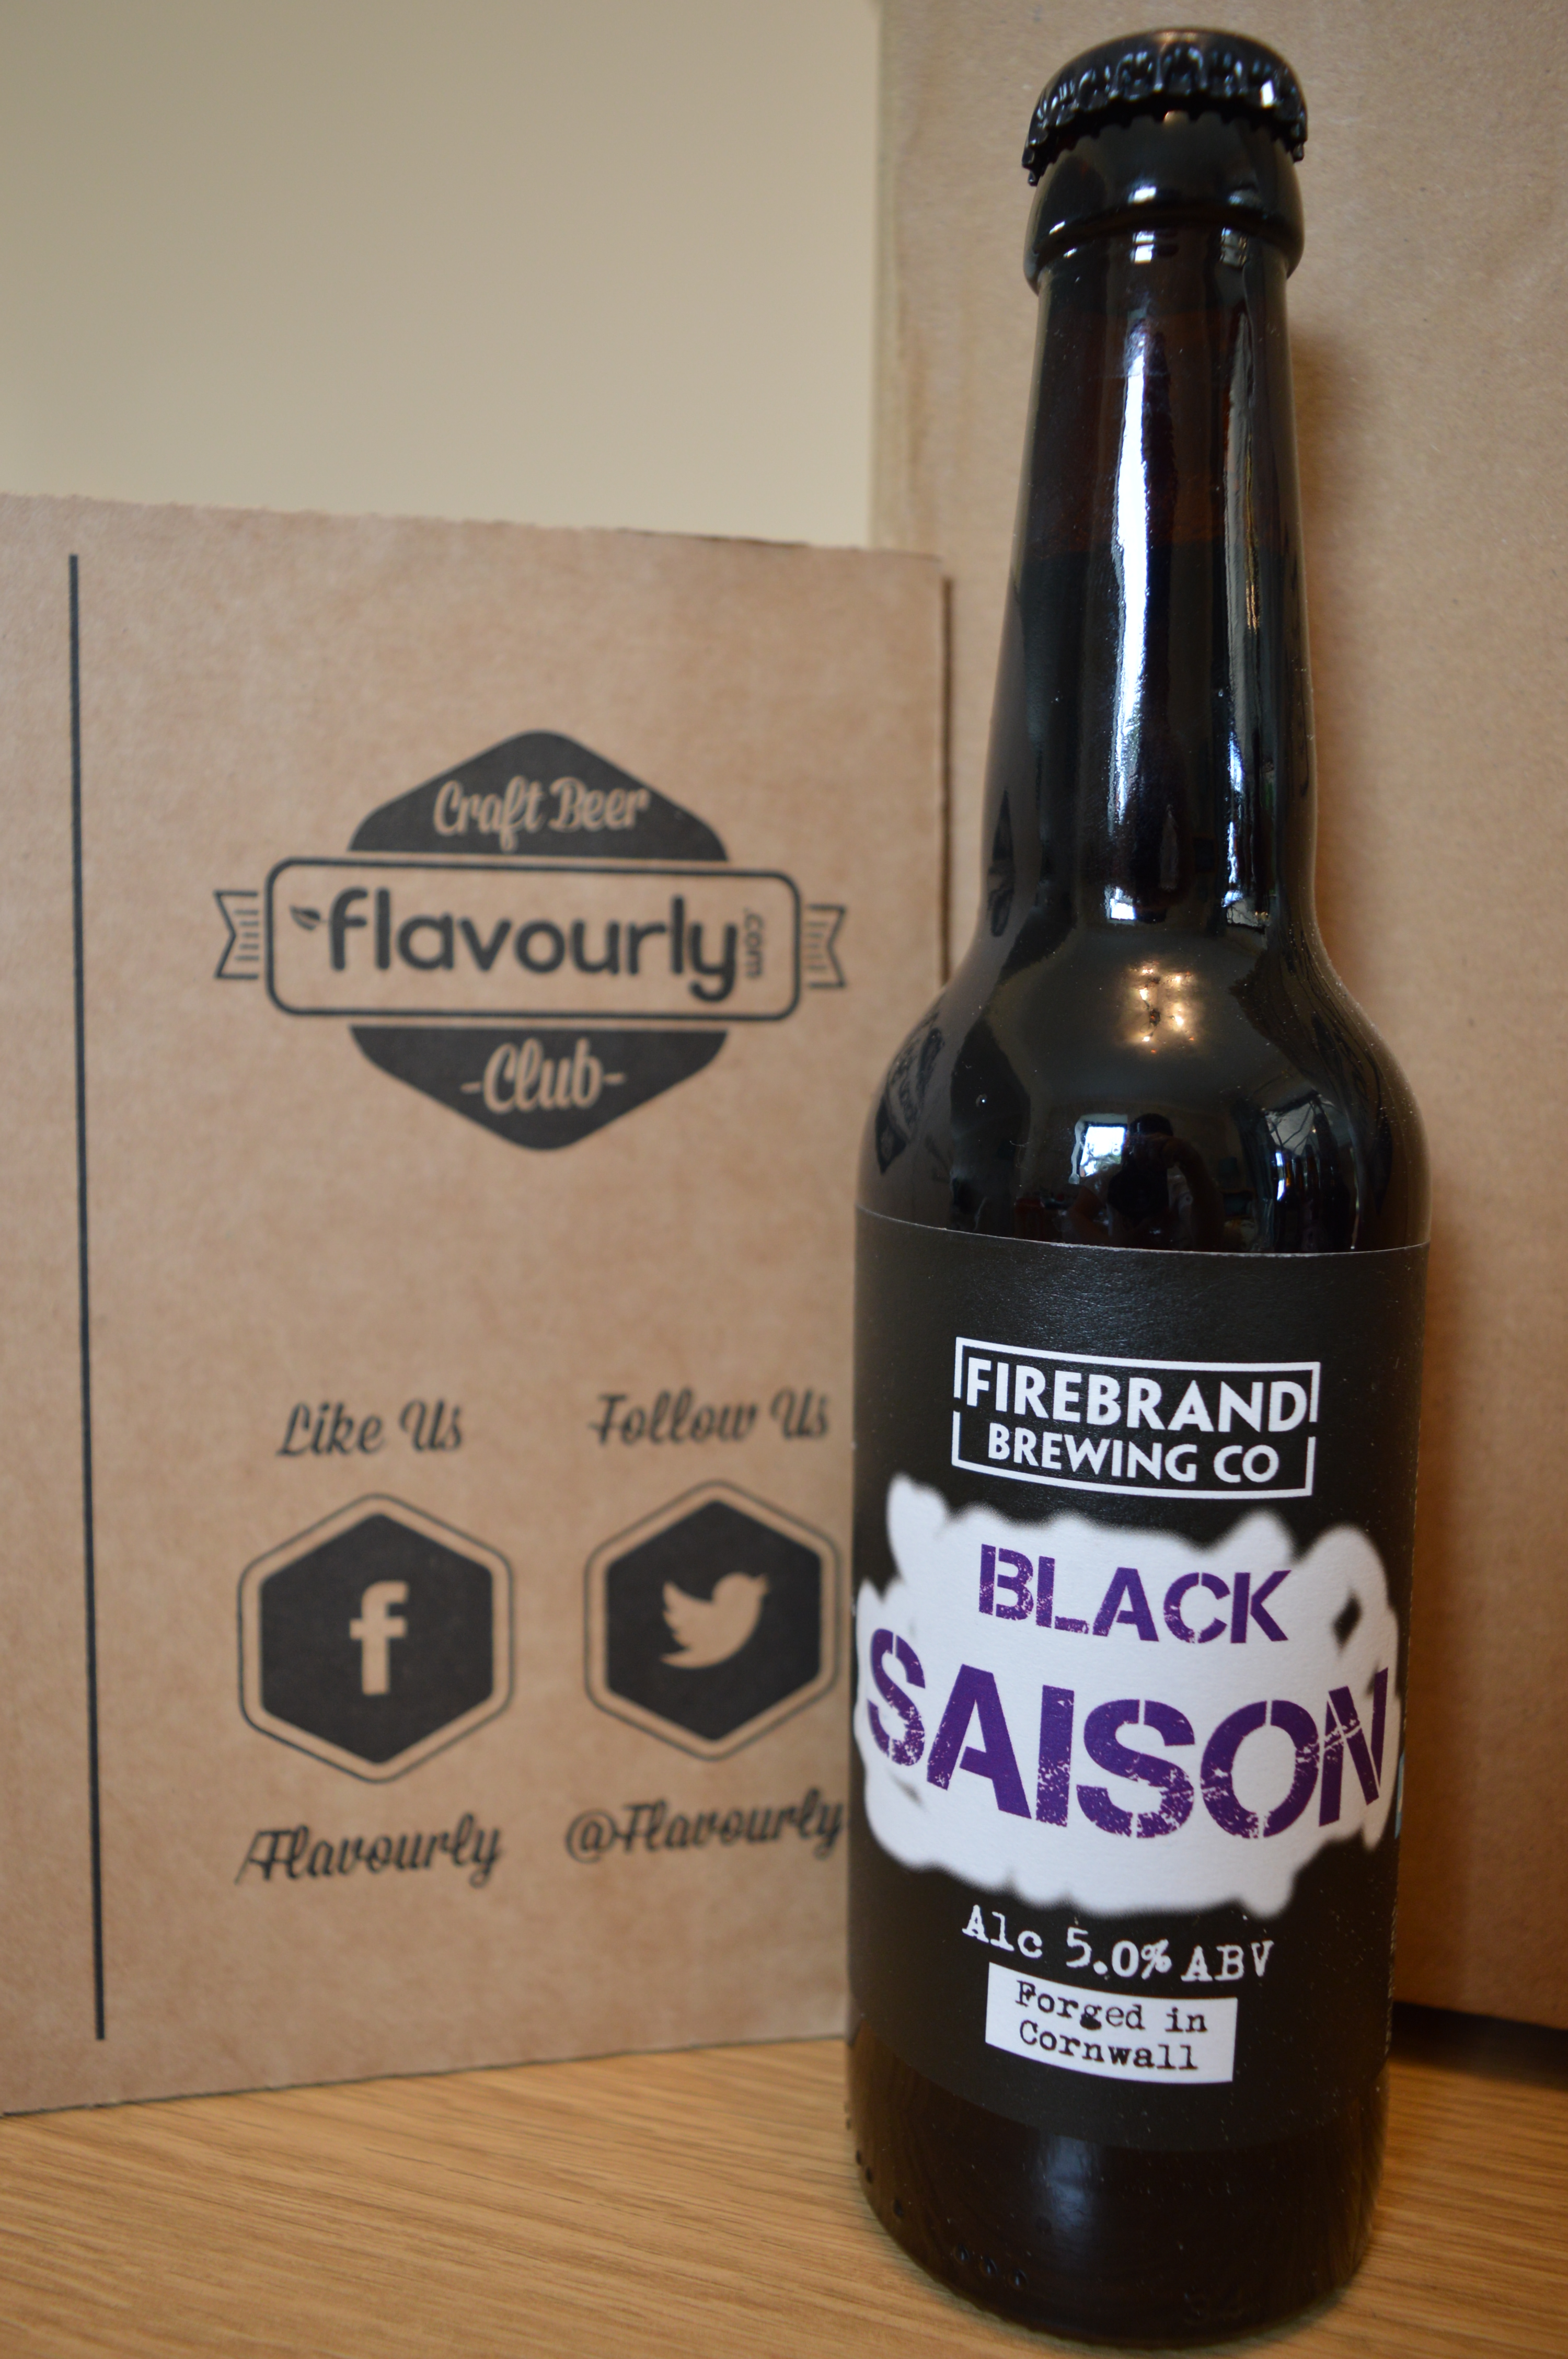 Black Saison - ABV 5.0% (Firebrand Brewery)